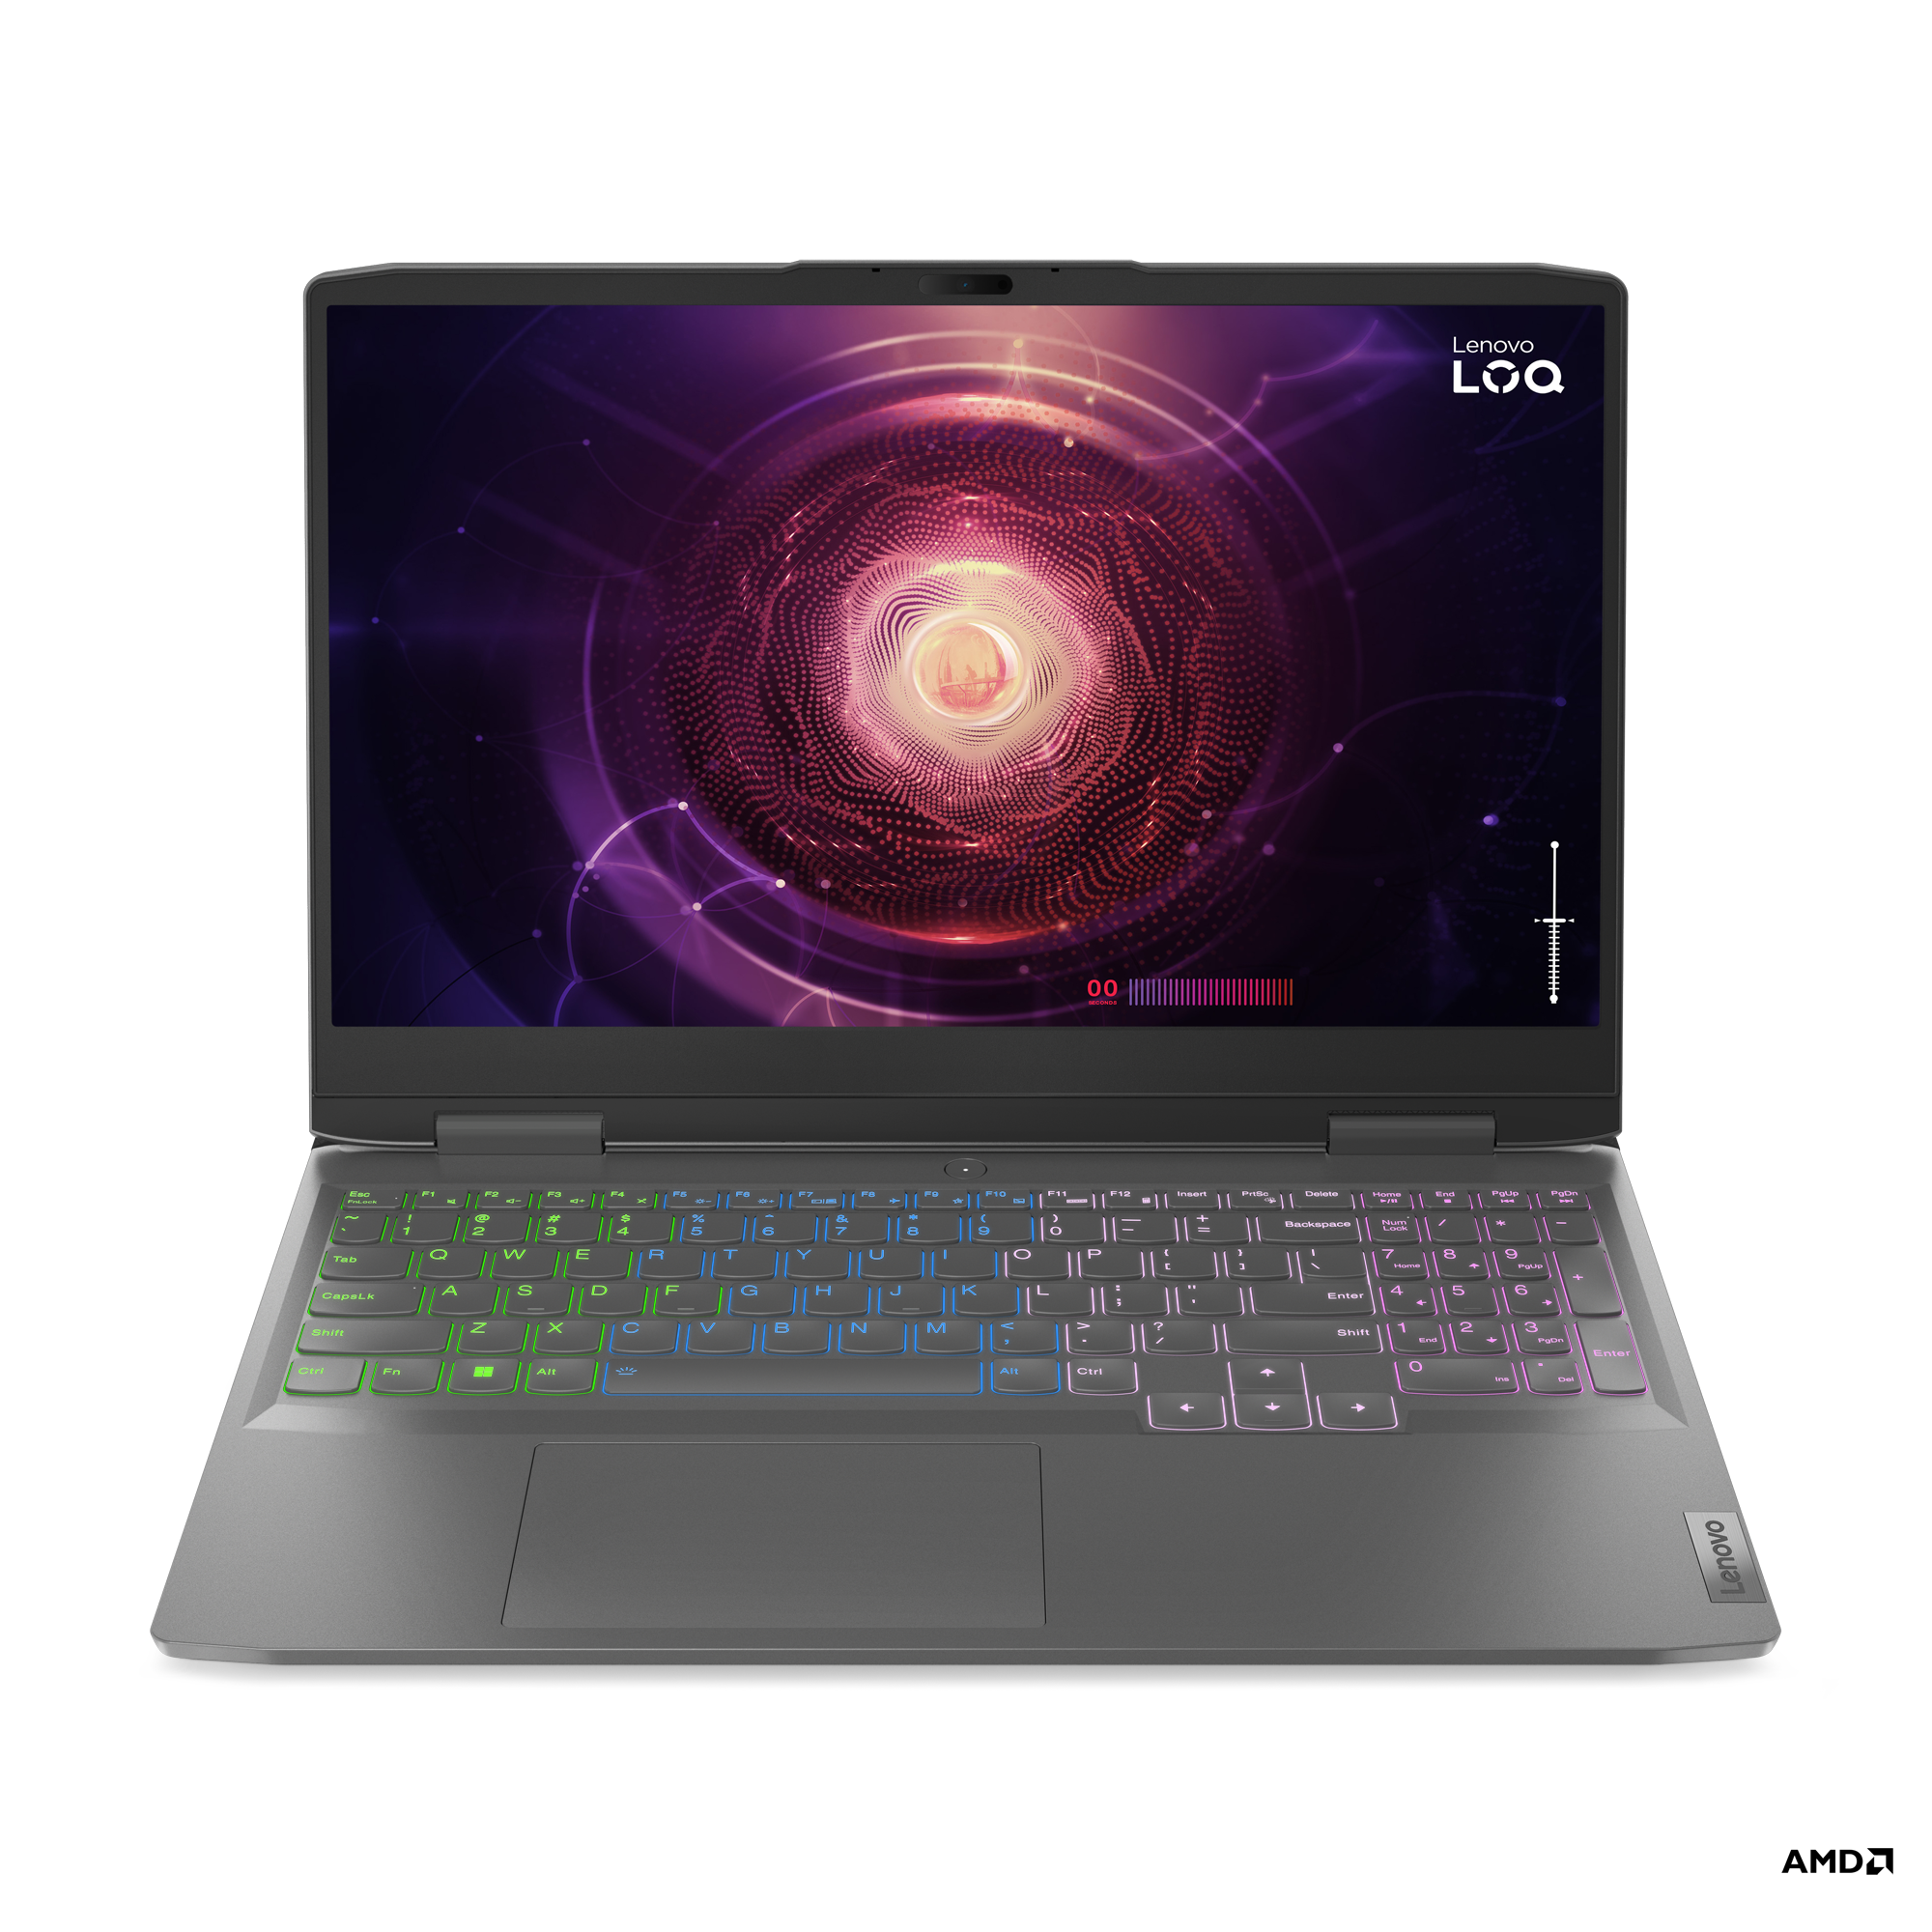 The Lenovo LOQ 15 AMD laptop